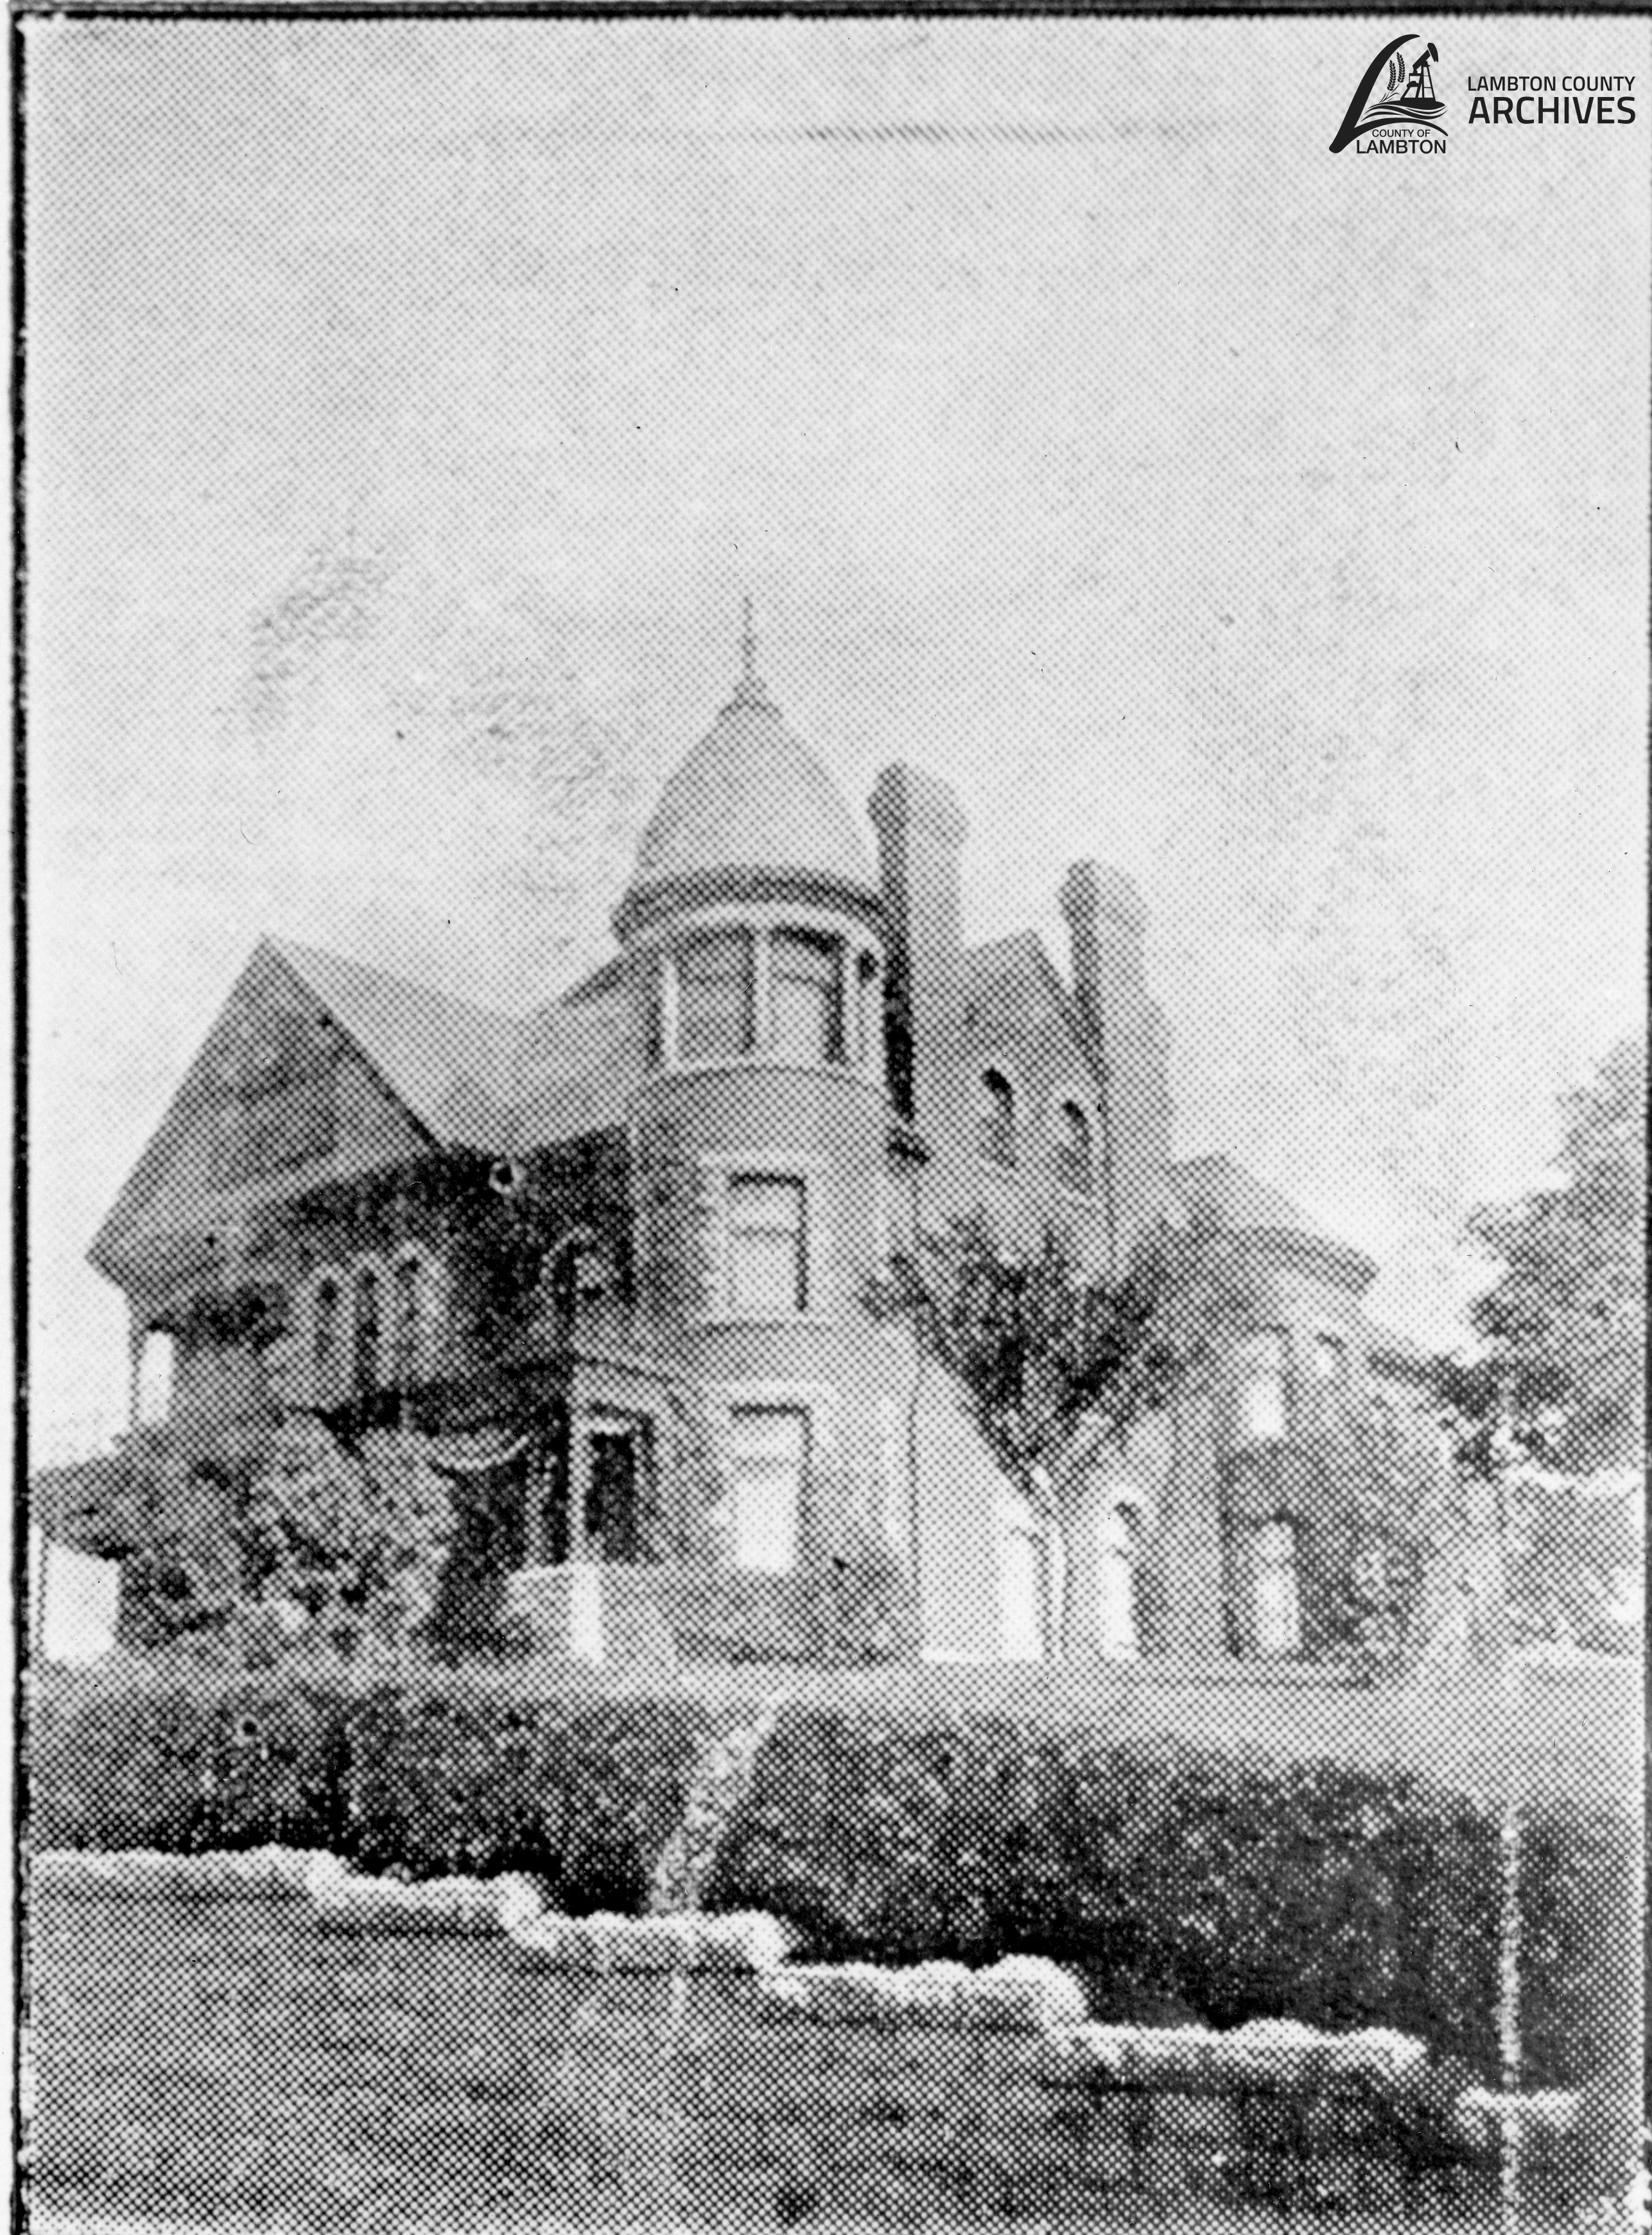 Historic photo of the Fairbank Mansion